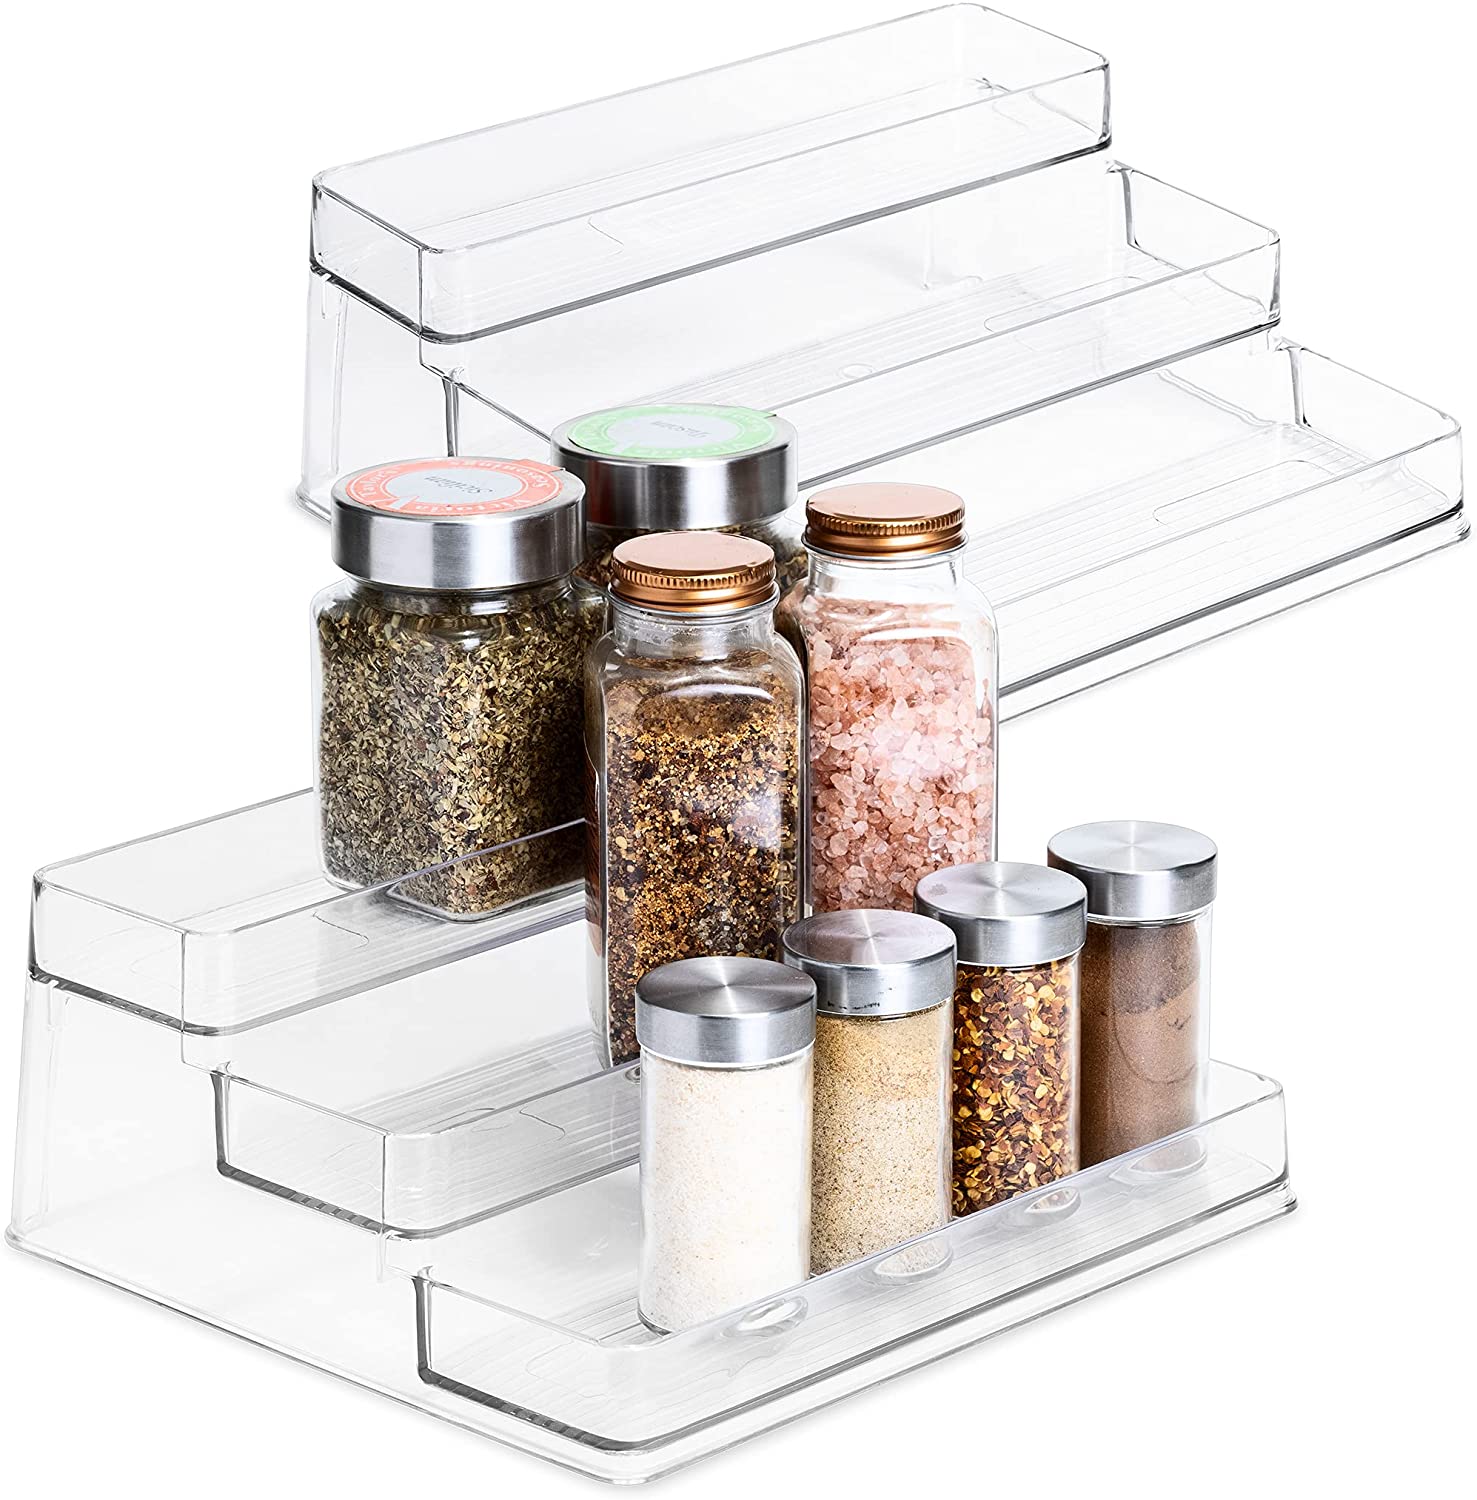 3-Tier Plastic Spice Rack - Clear - Smart Design® 8